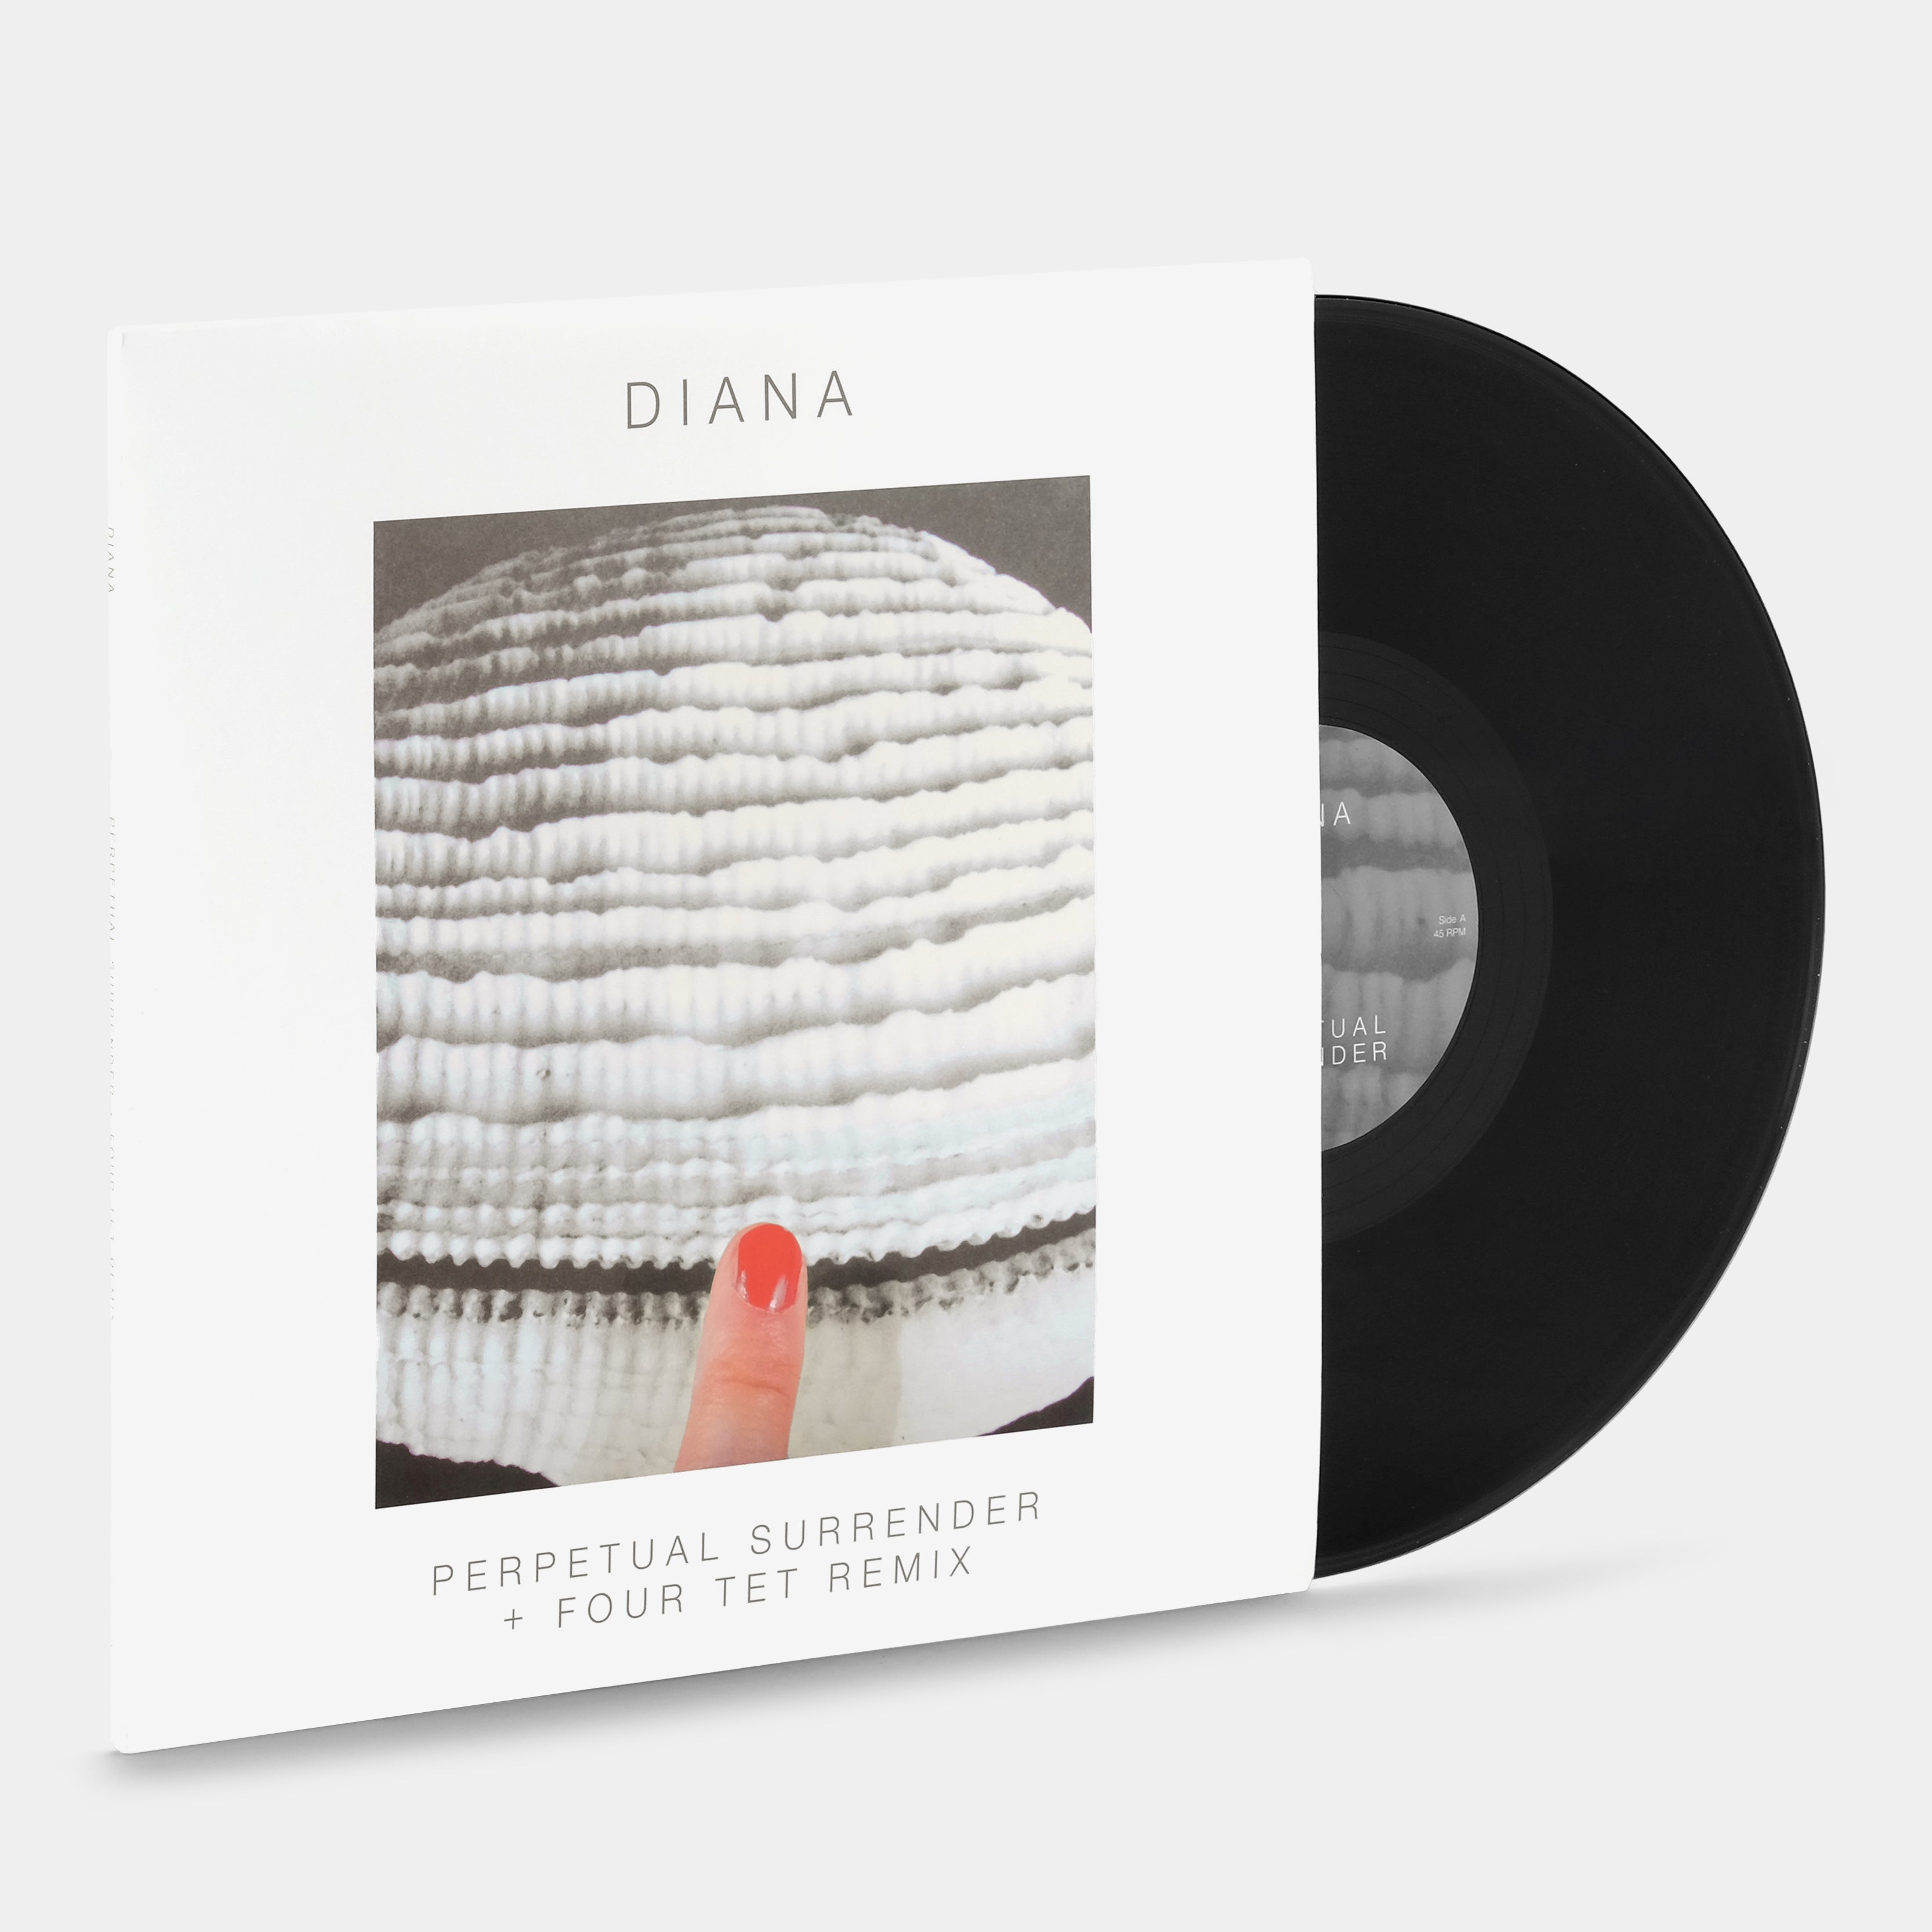 Diana - Perpetual Surrender 12" Single Vinyl Record